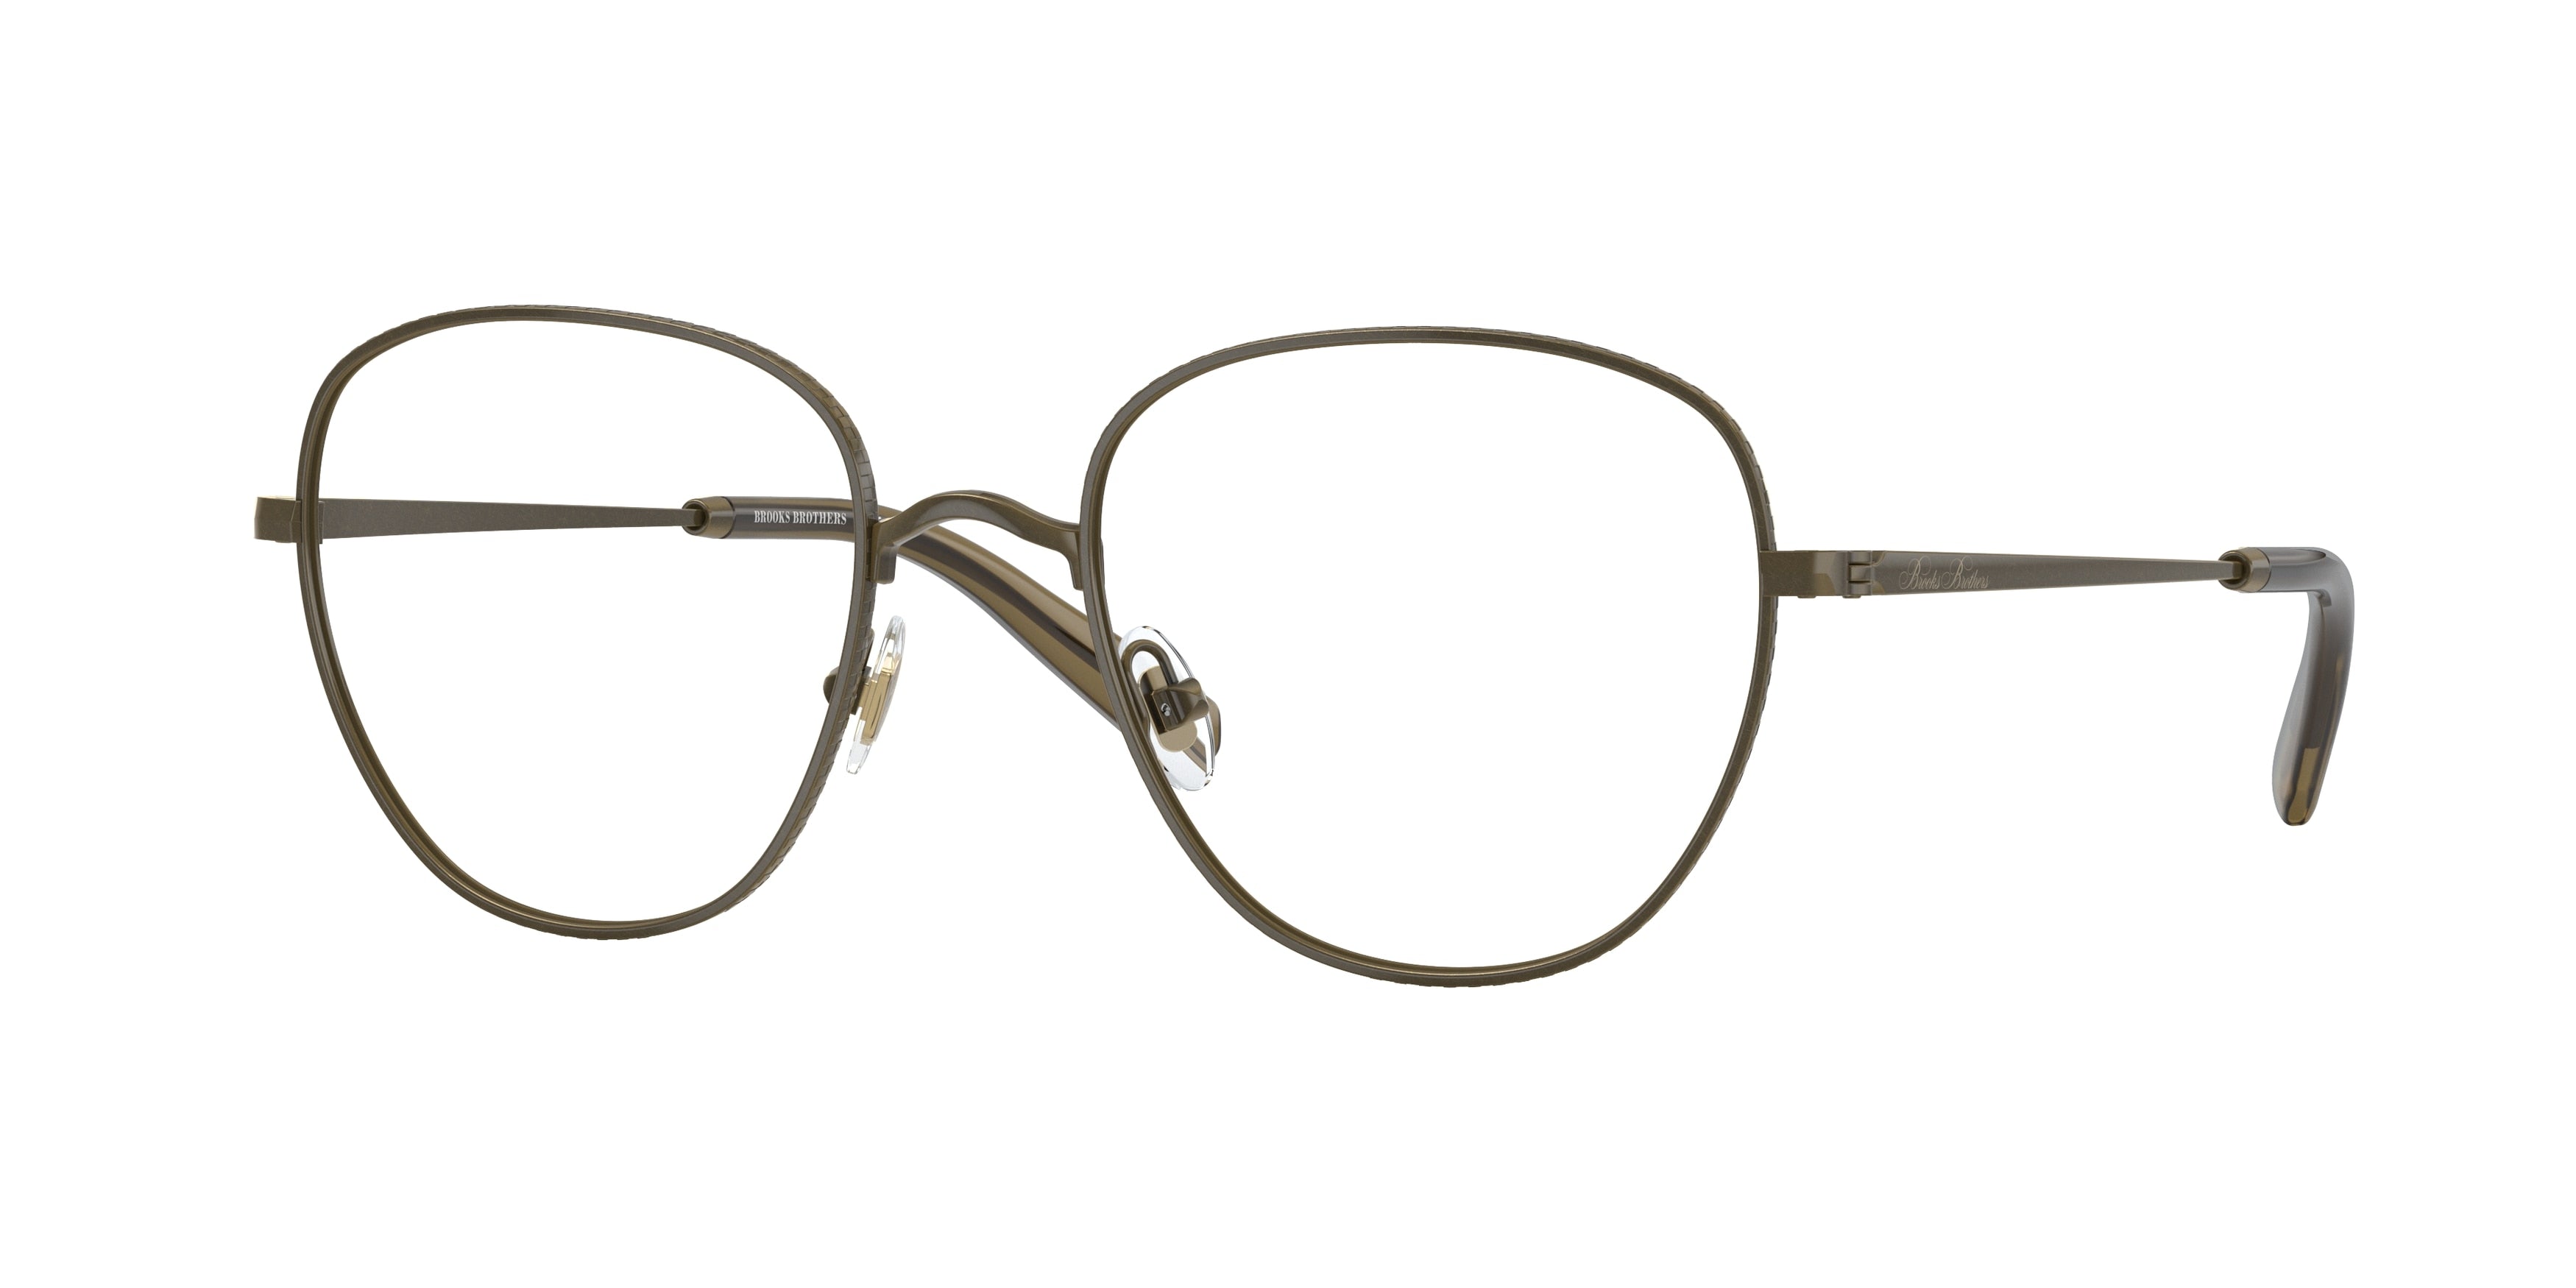 Brooks Brothers BB1103 Round Eyeglasses